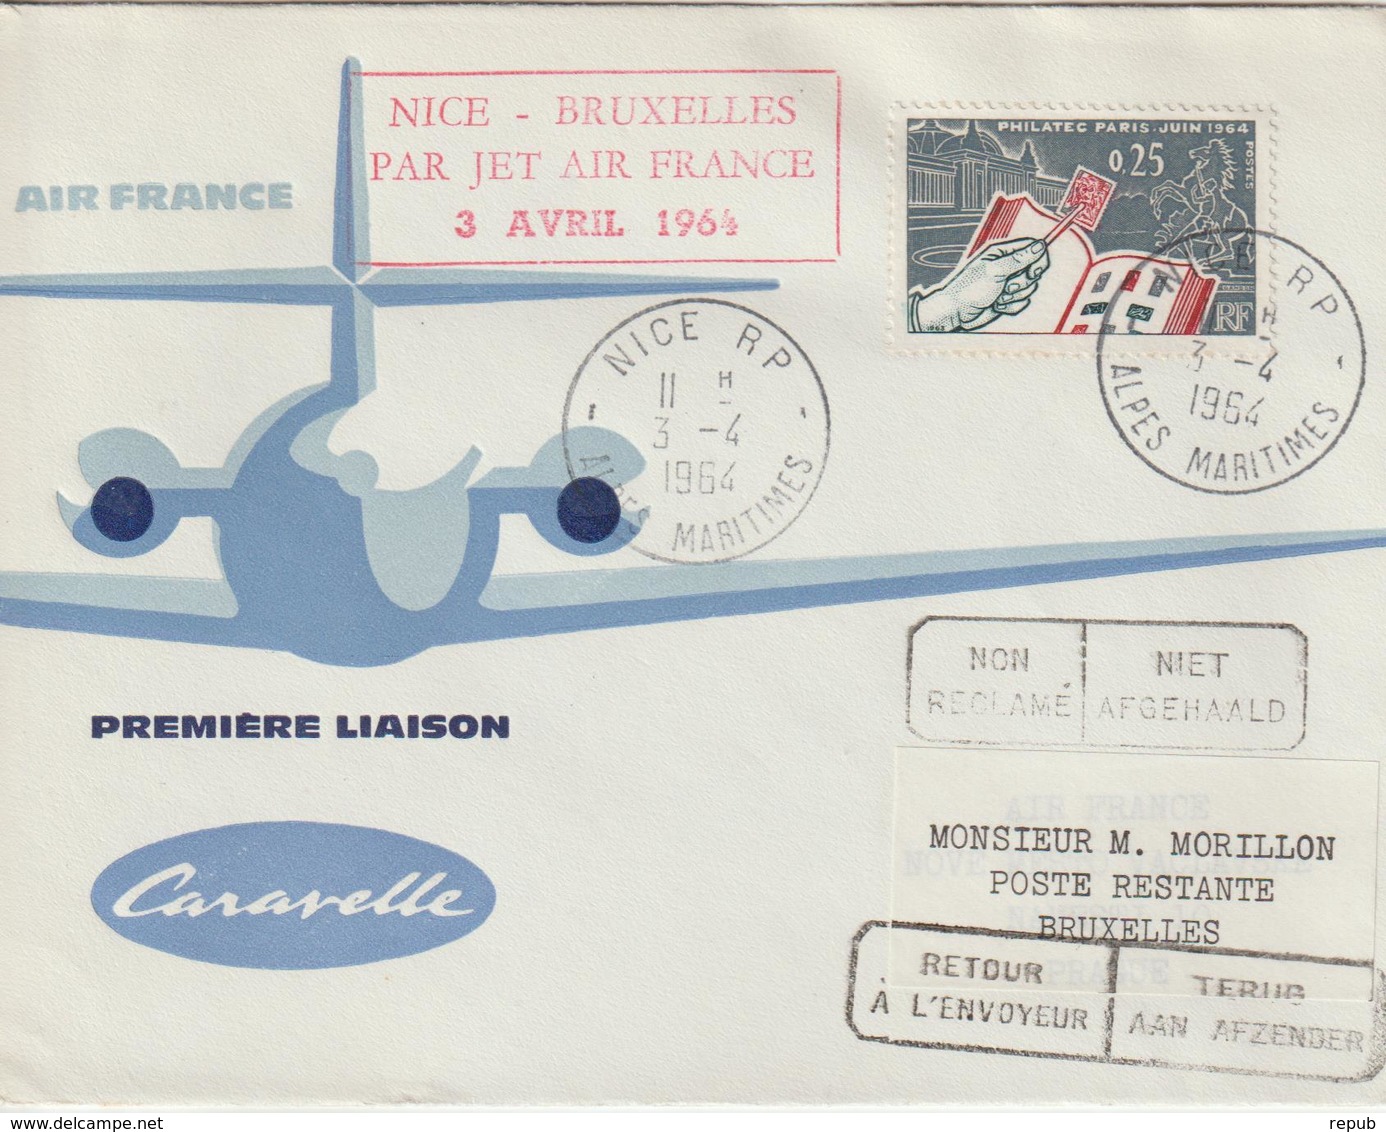 France 1964 Première Liaison Air France Nice Bruxelles - First Flight Covers